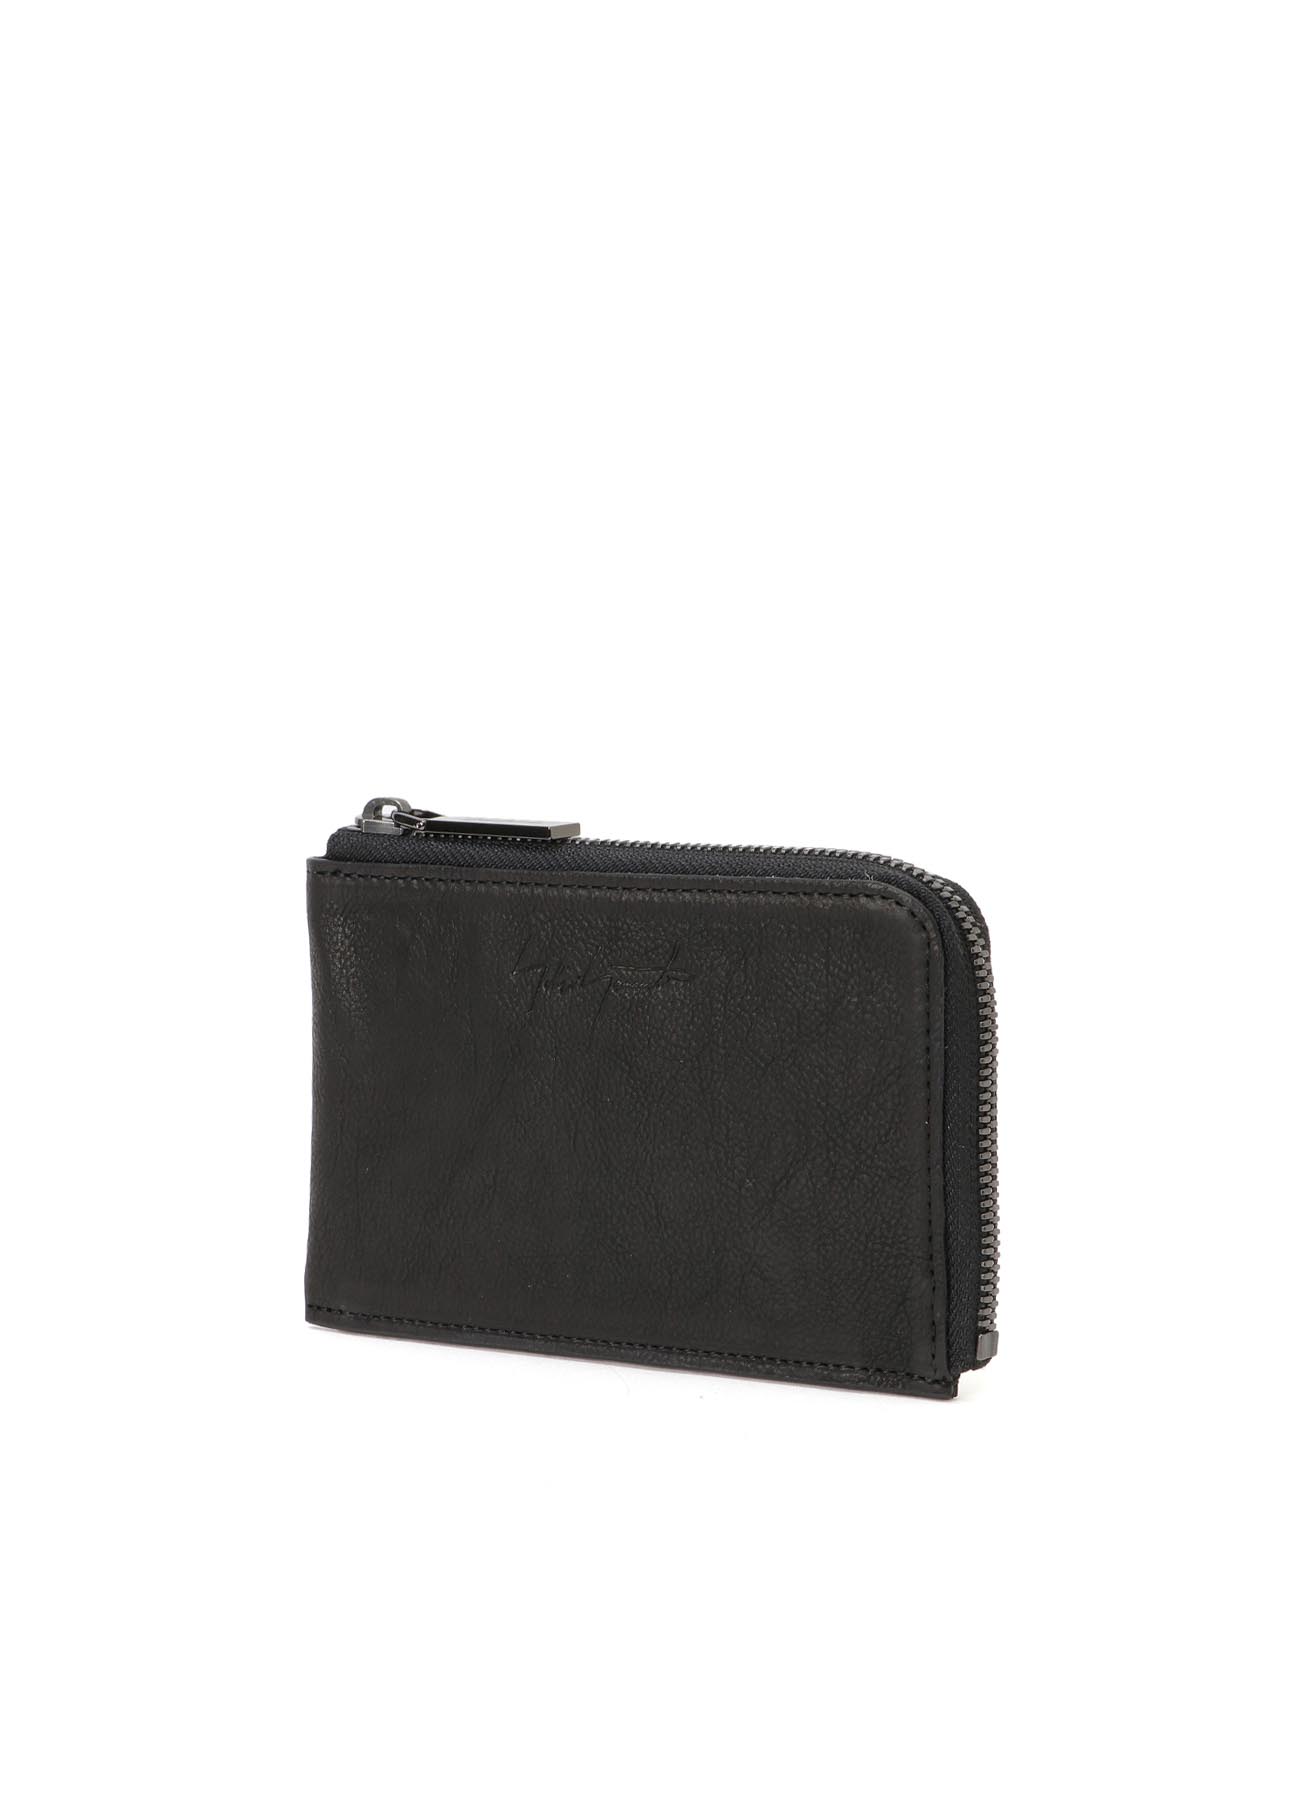 Plain(short wallet)